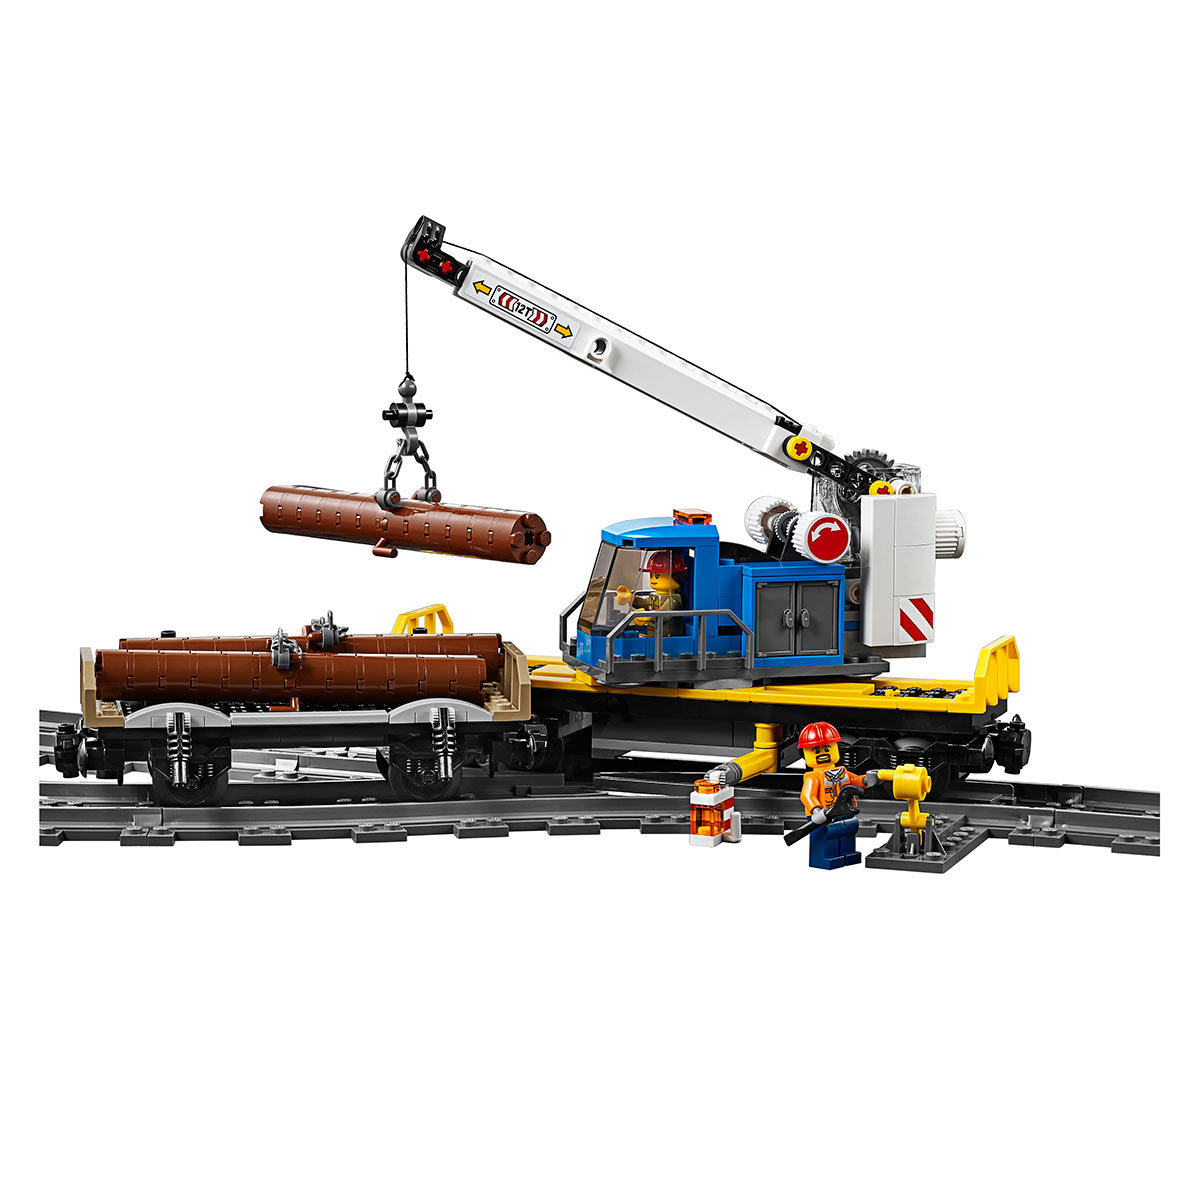 LEGO City Cargo Train - Model 60198 (6-12 Years)